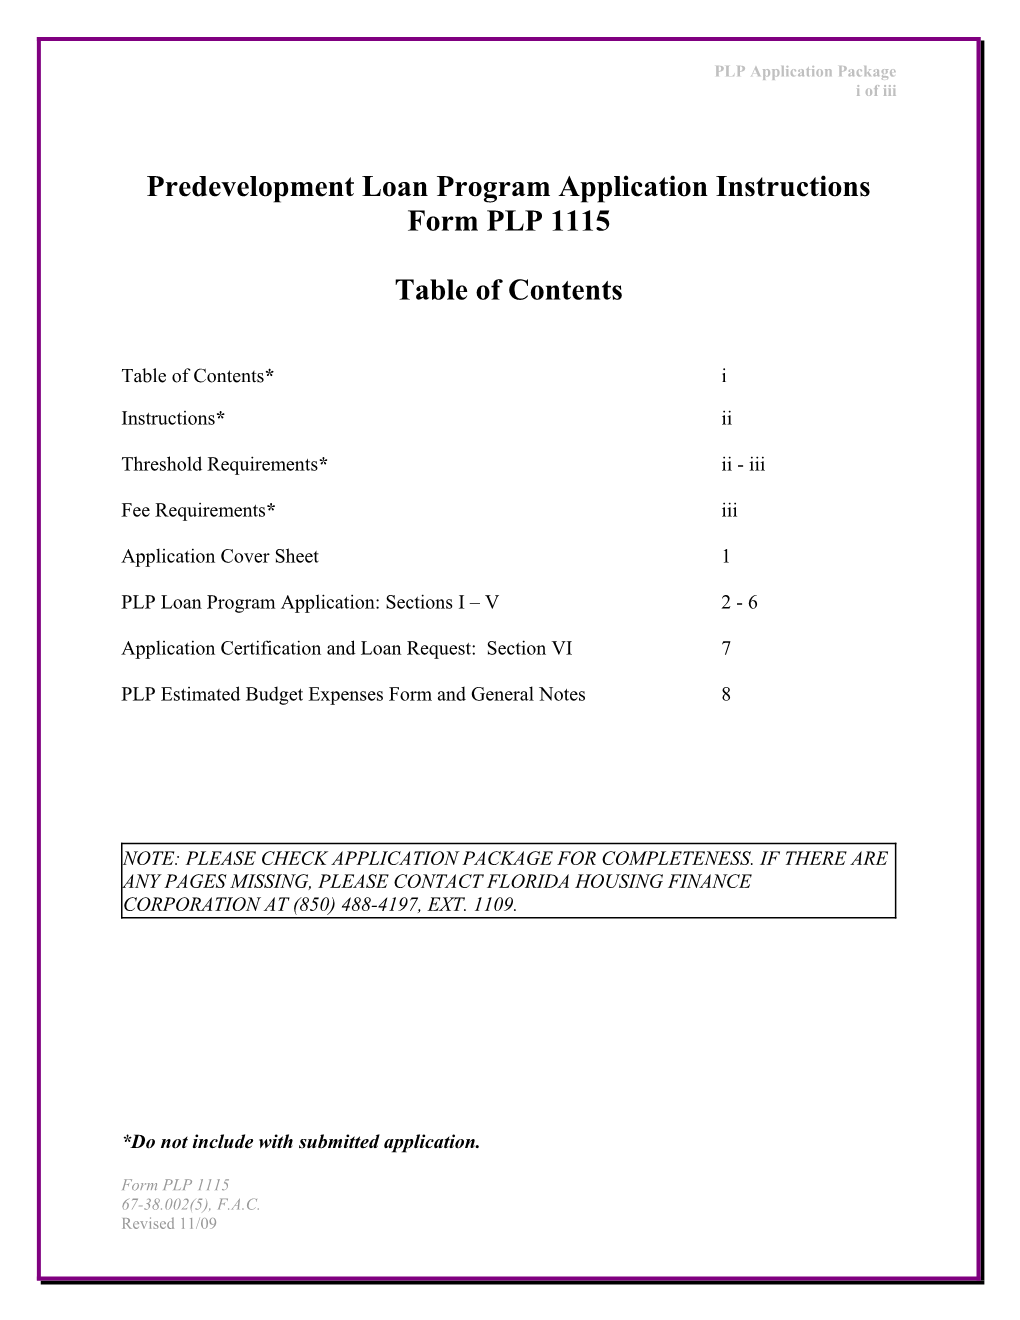 Predevelopment Loan Program Application Instructions